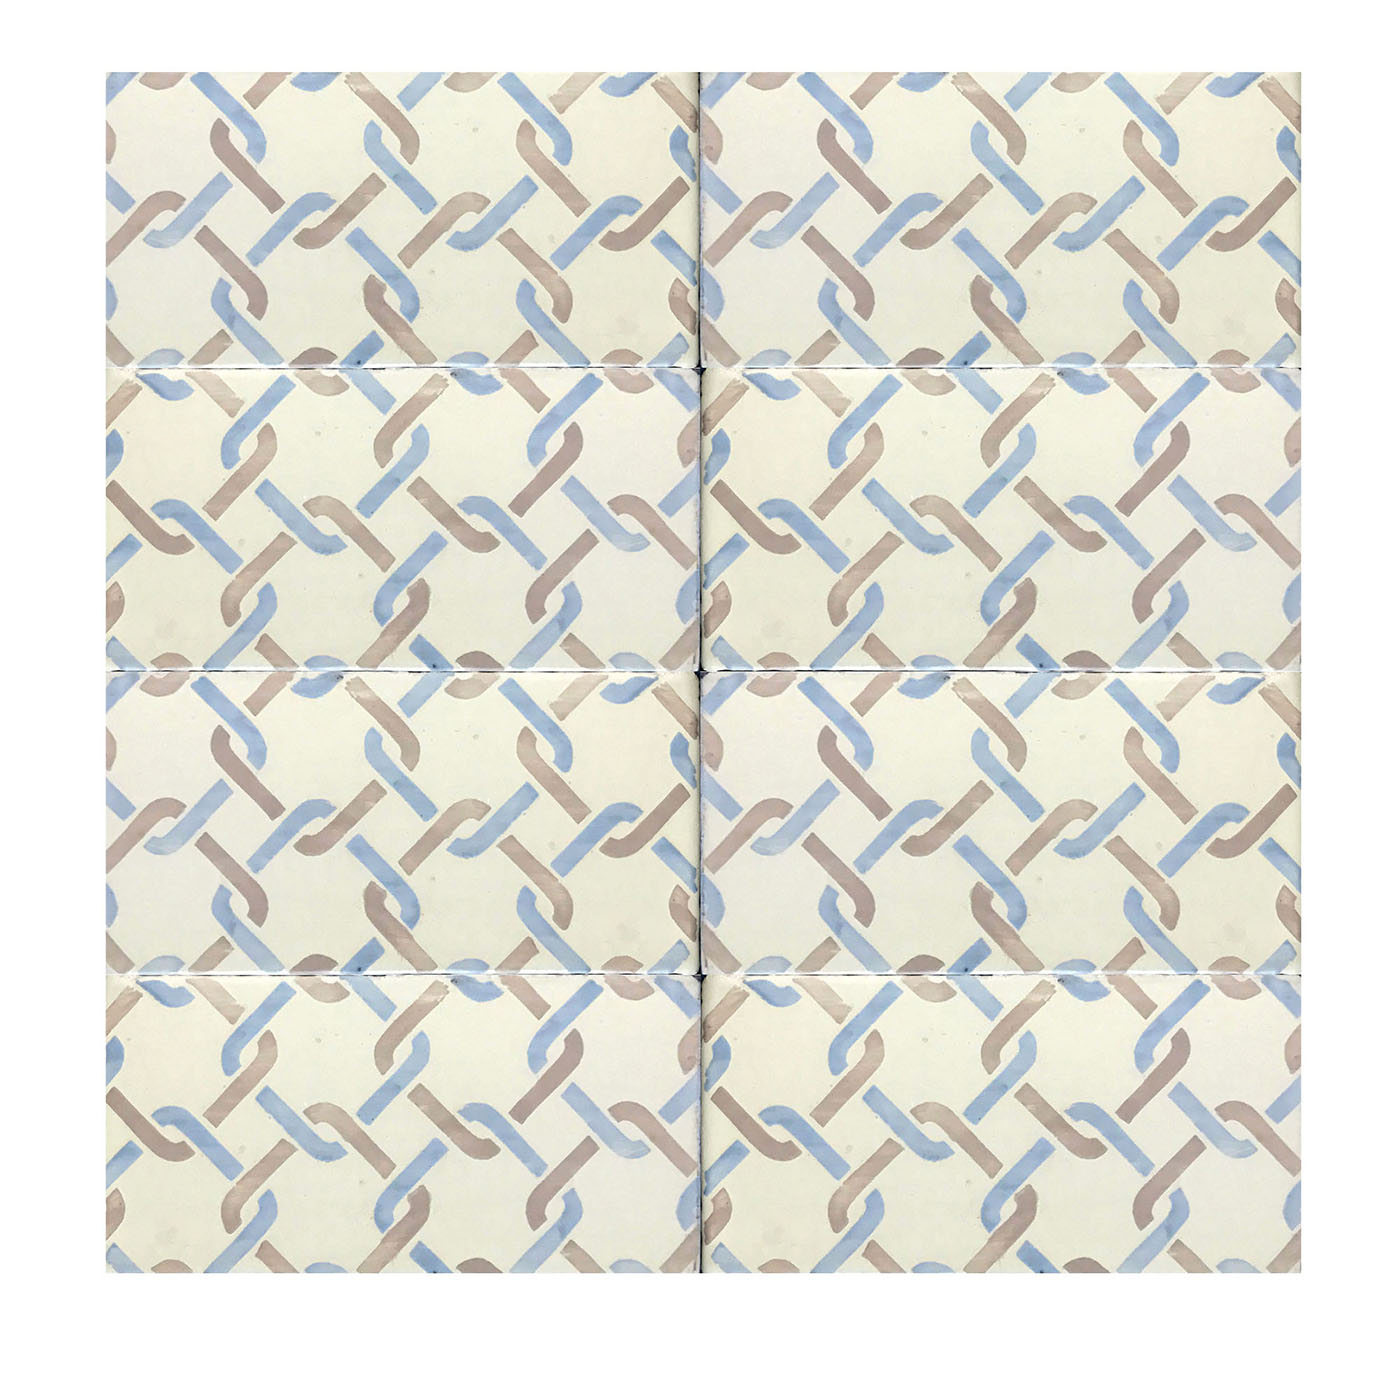 Daamè Set of 50 Rectangular Ivory Tiles #1 - Main view